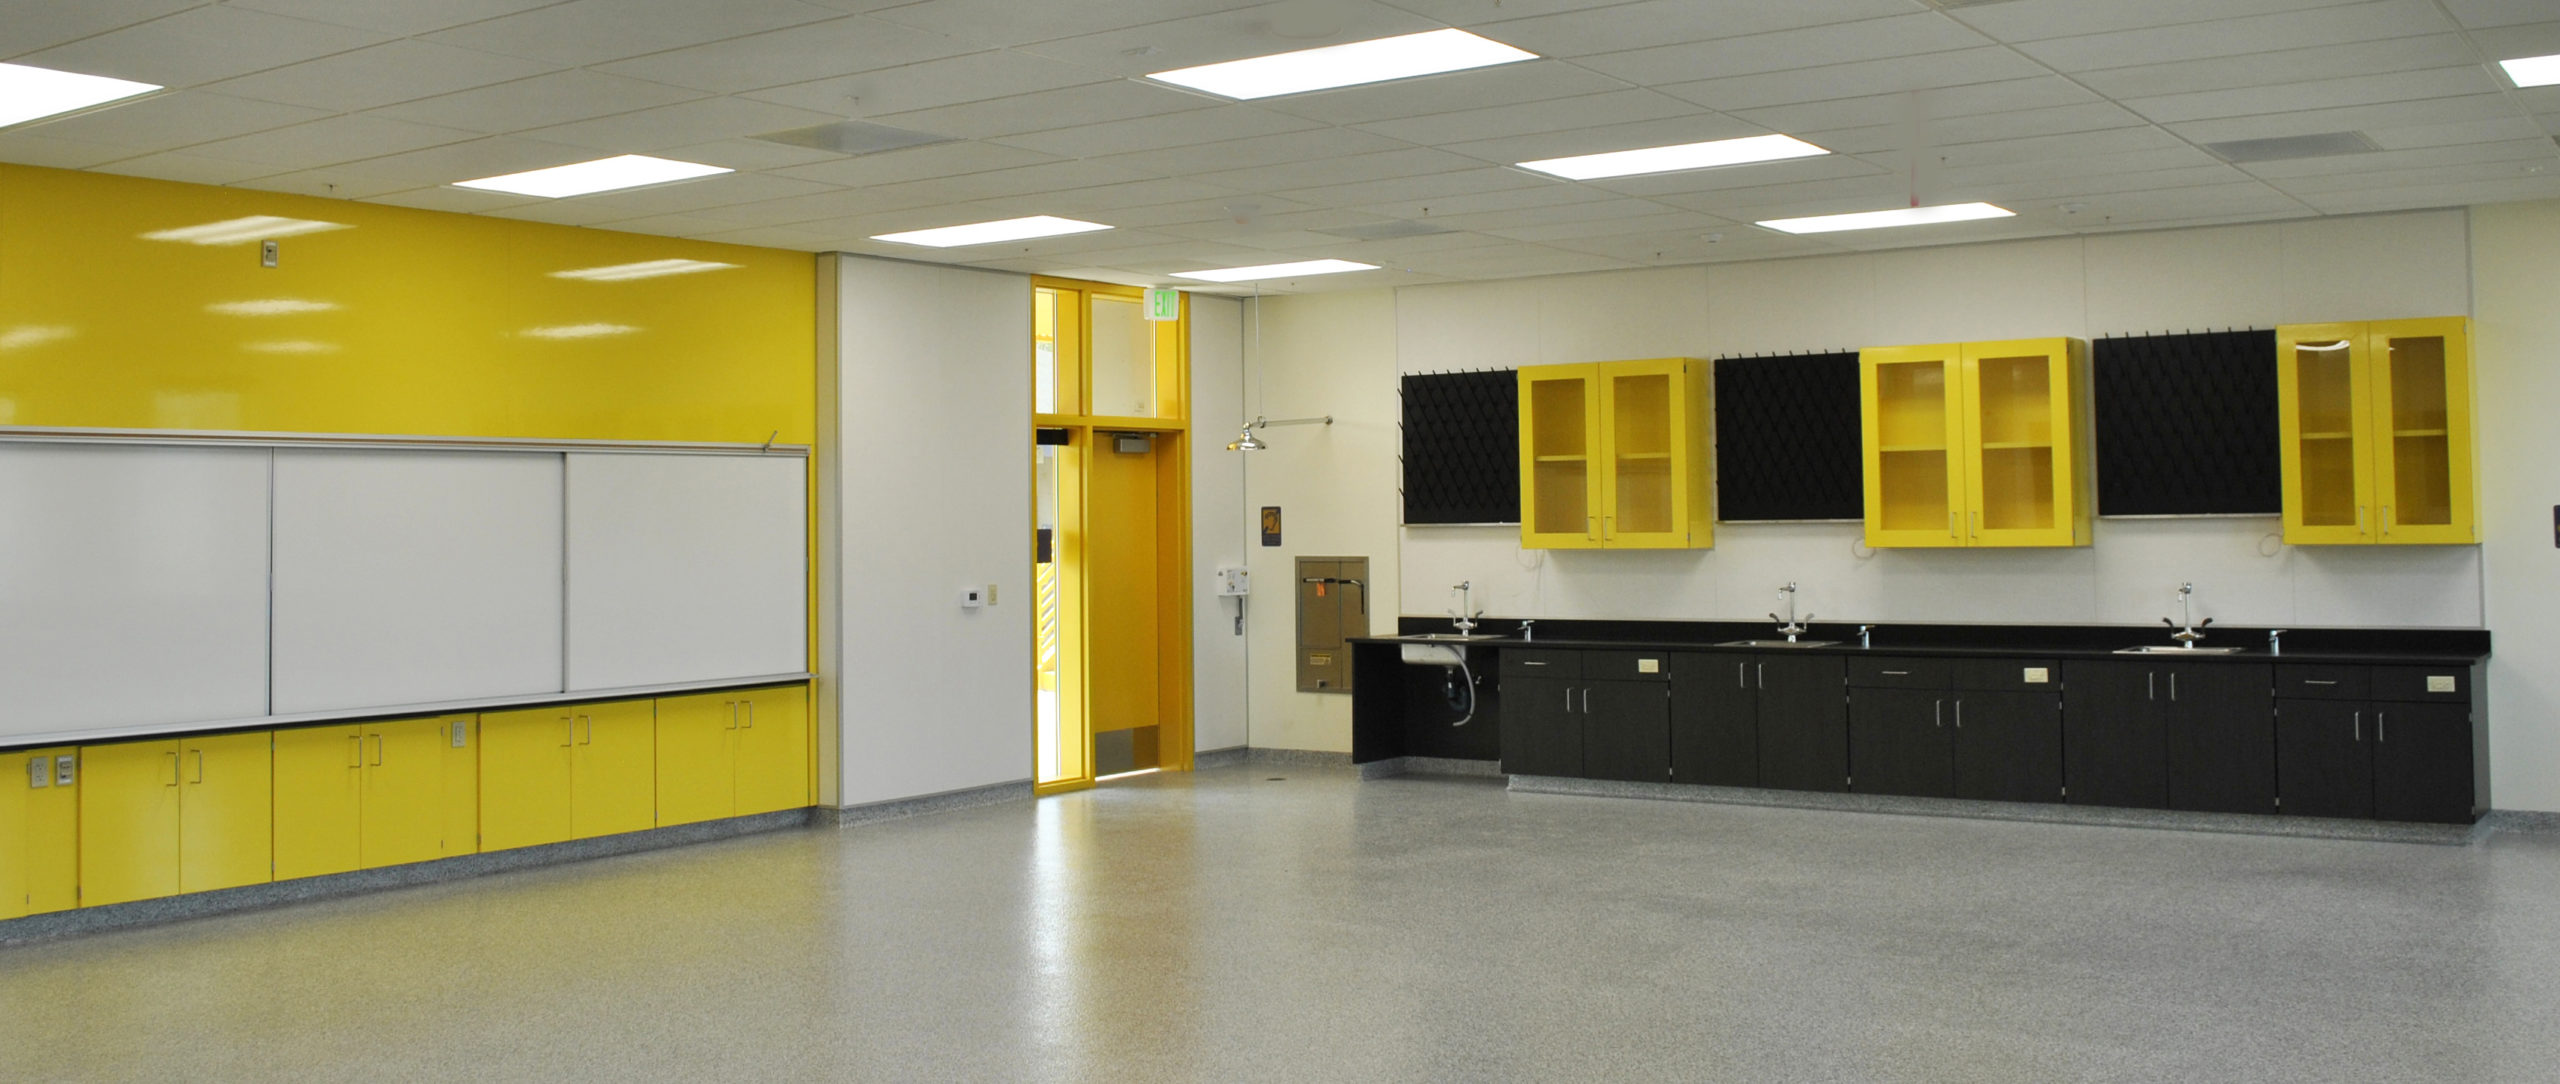 Tokay High School Modular Classroom Building Interior